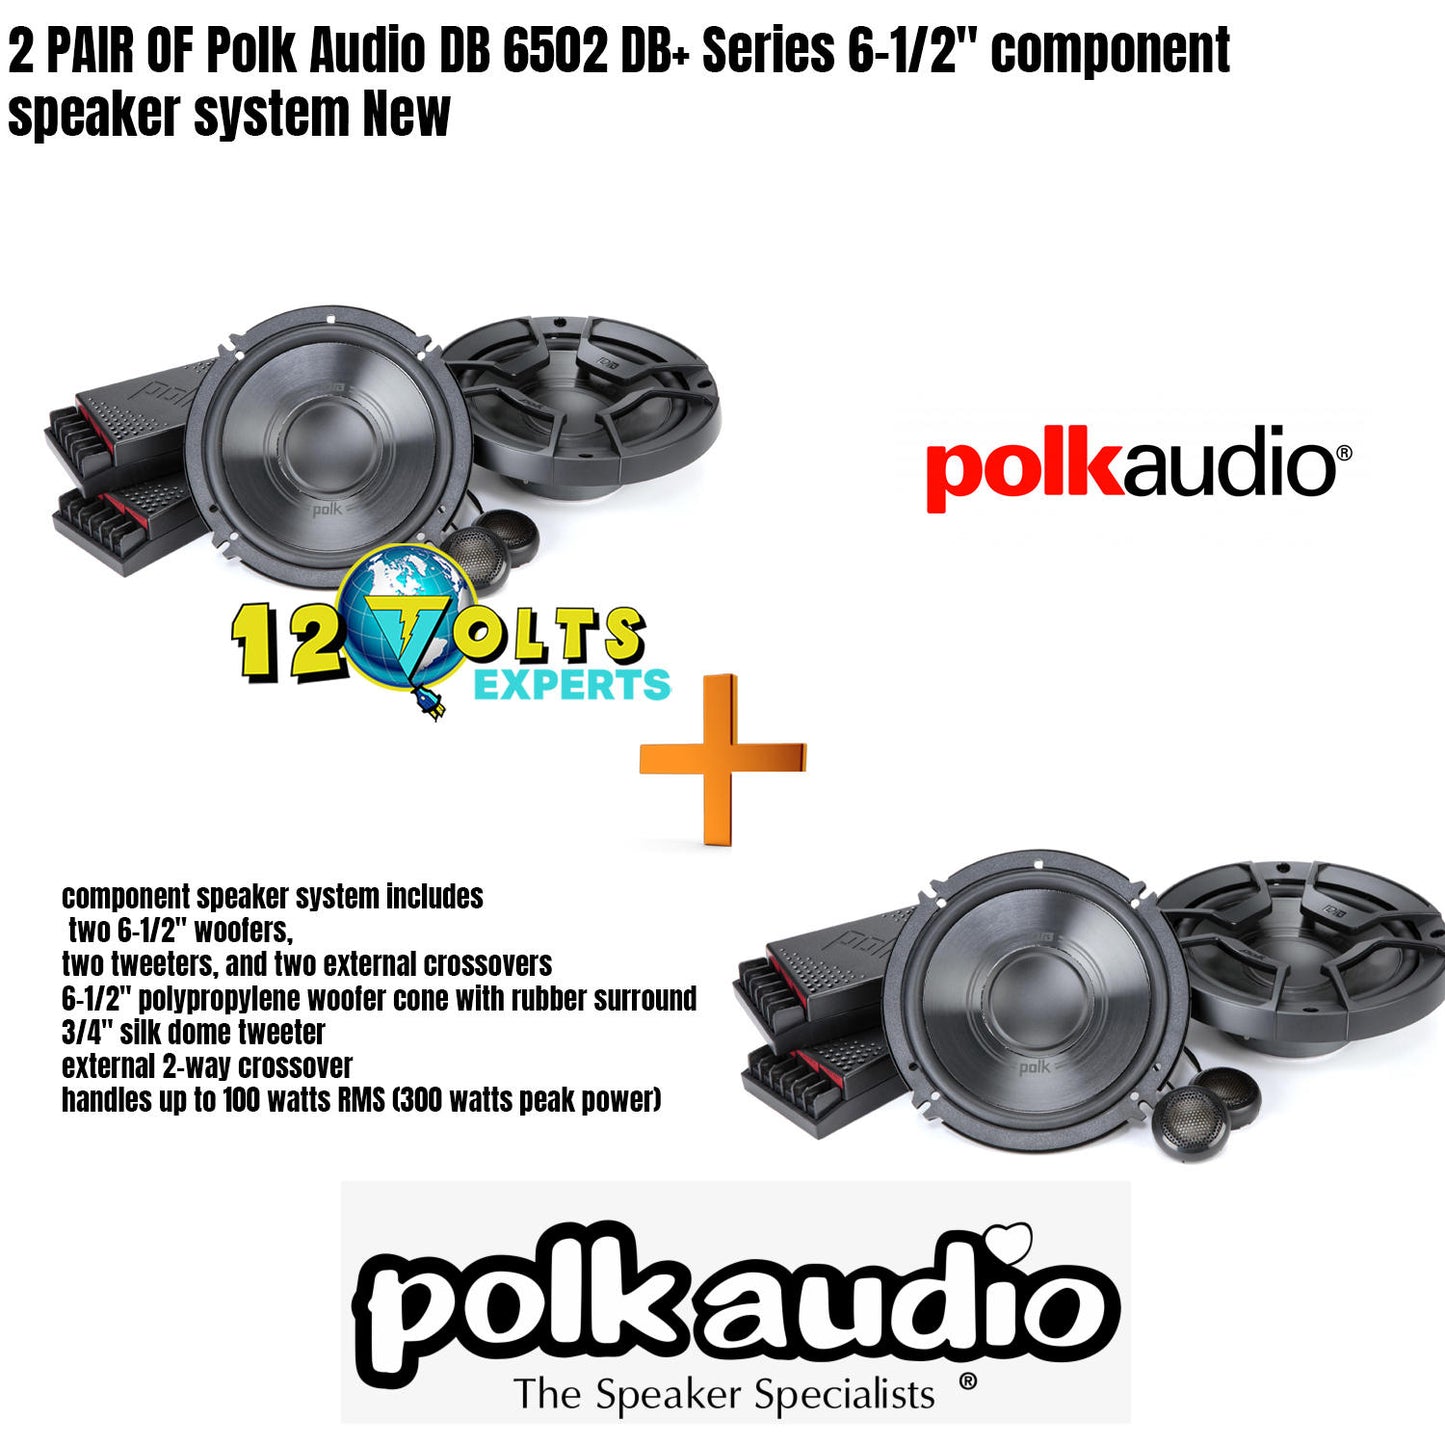 2 Pair Of Polk Audio DB 6502 DB+ Series 6-1/2" component speaker system